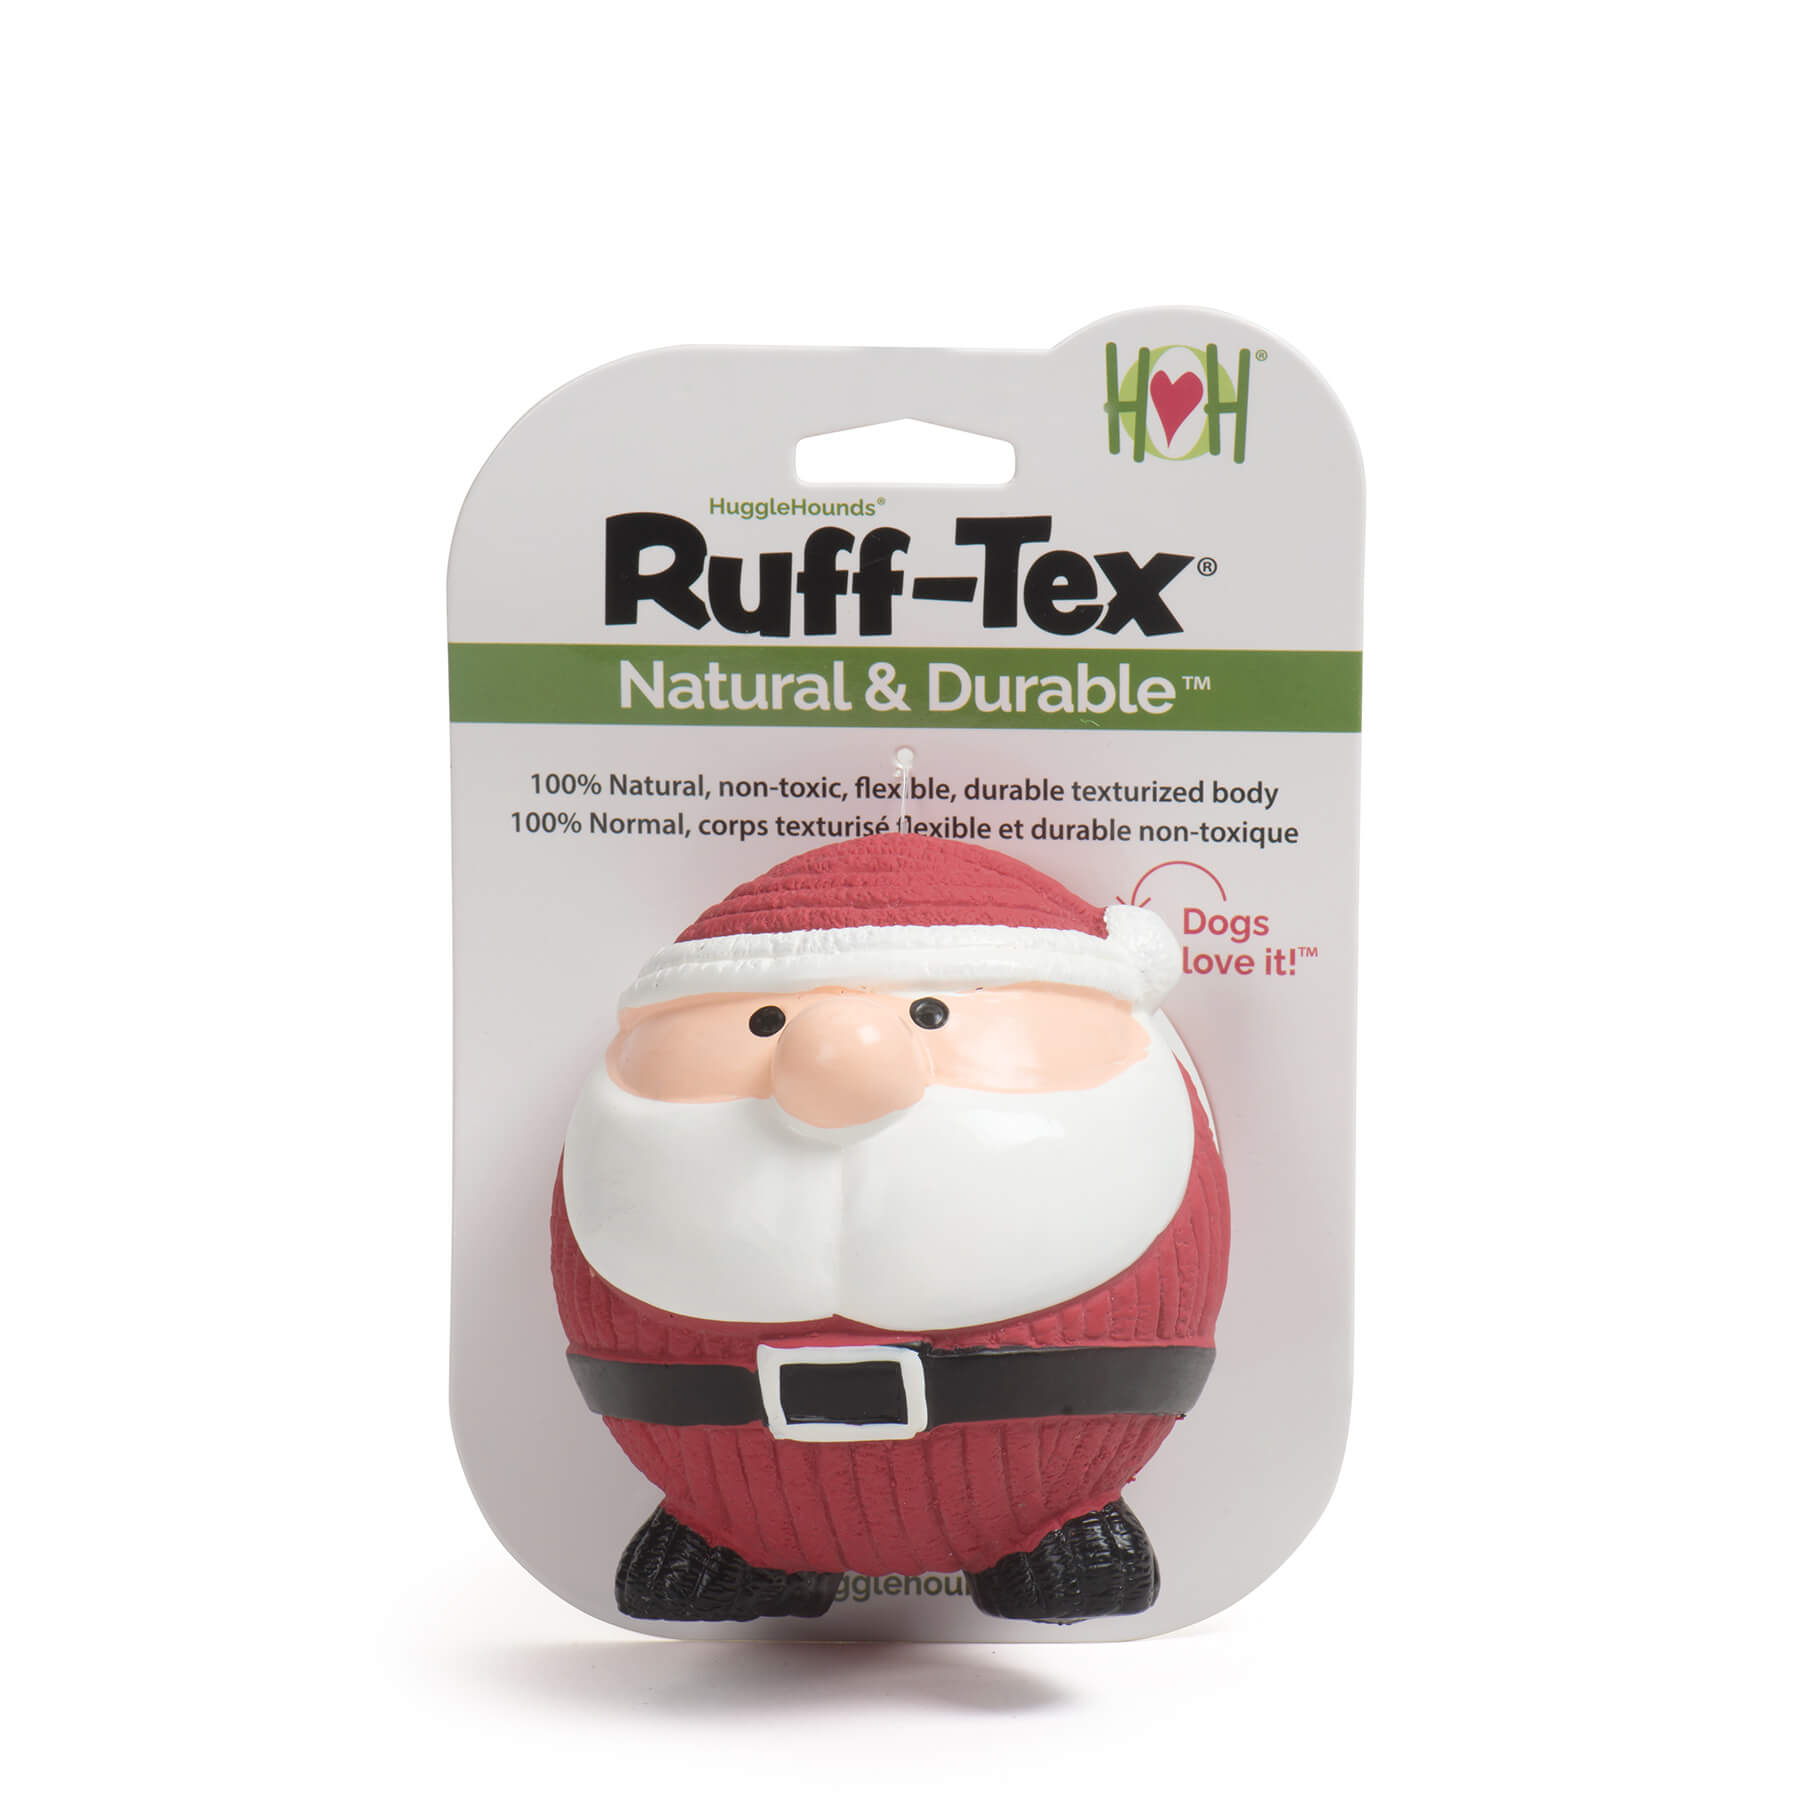 HuggleHounds Ruff-Tex Santa ball in packaging